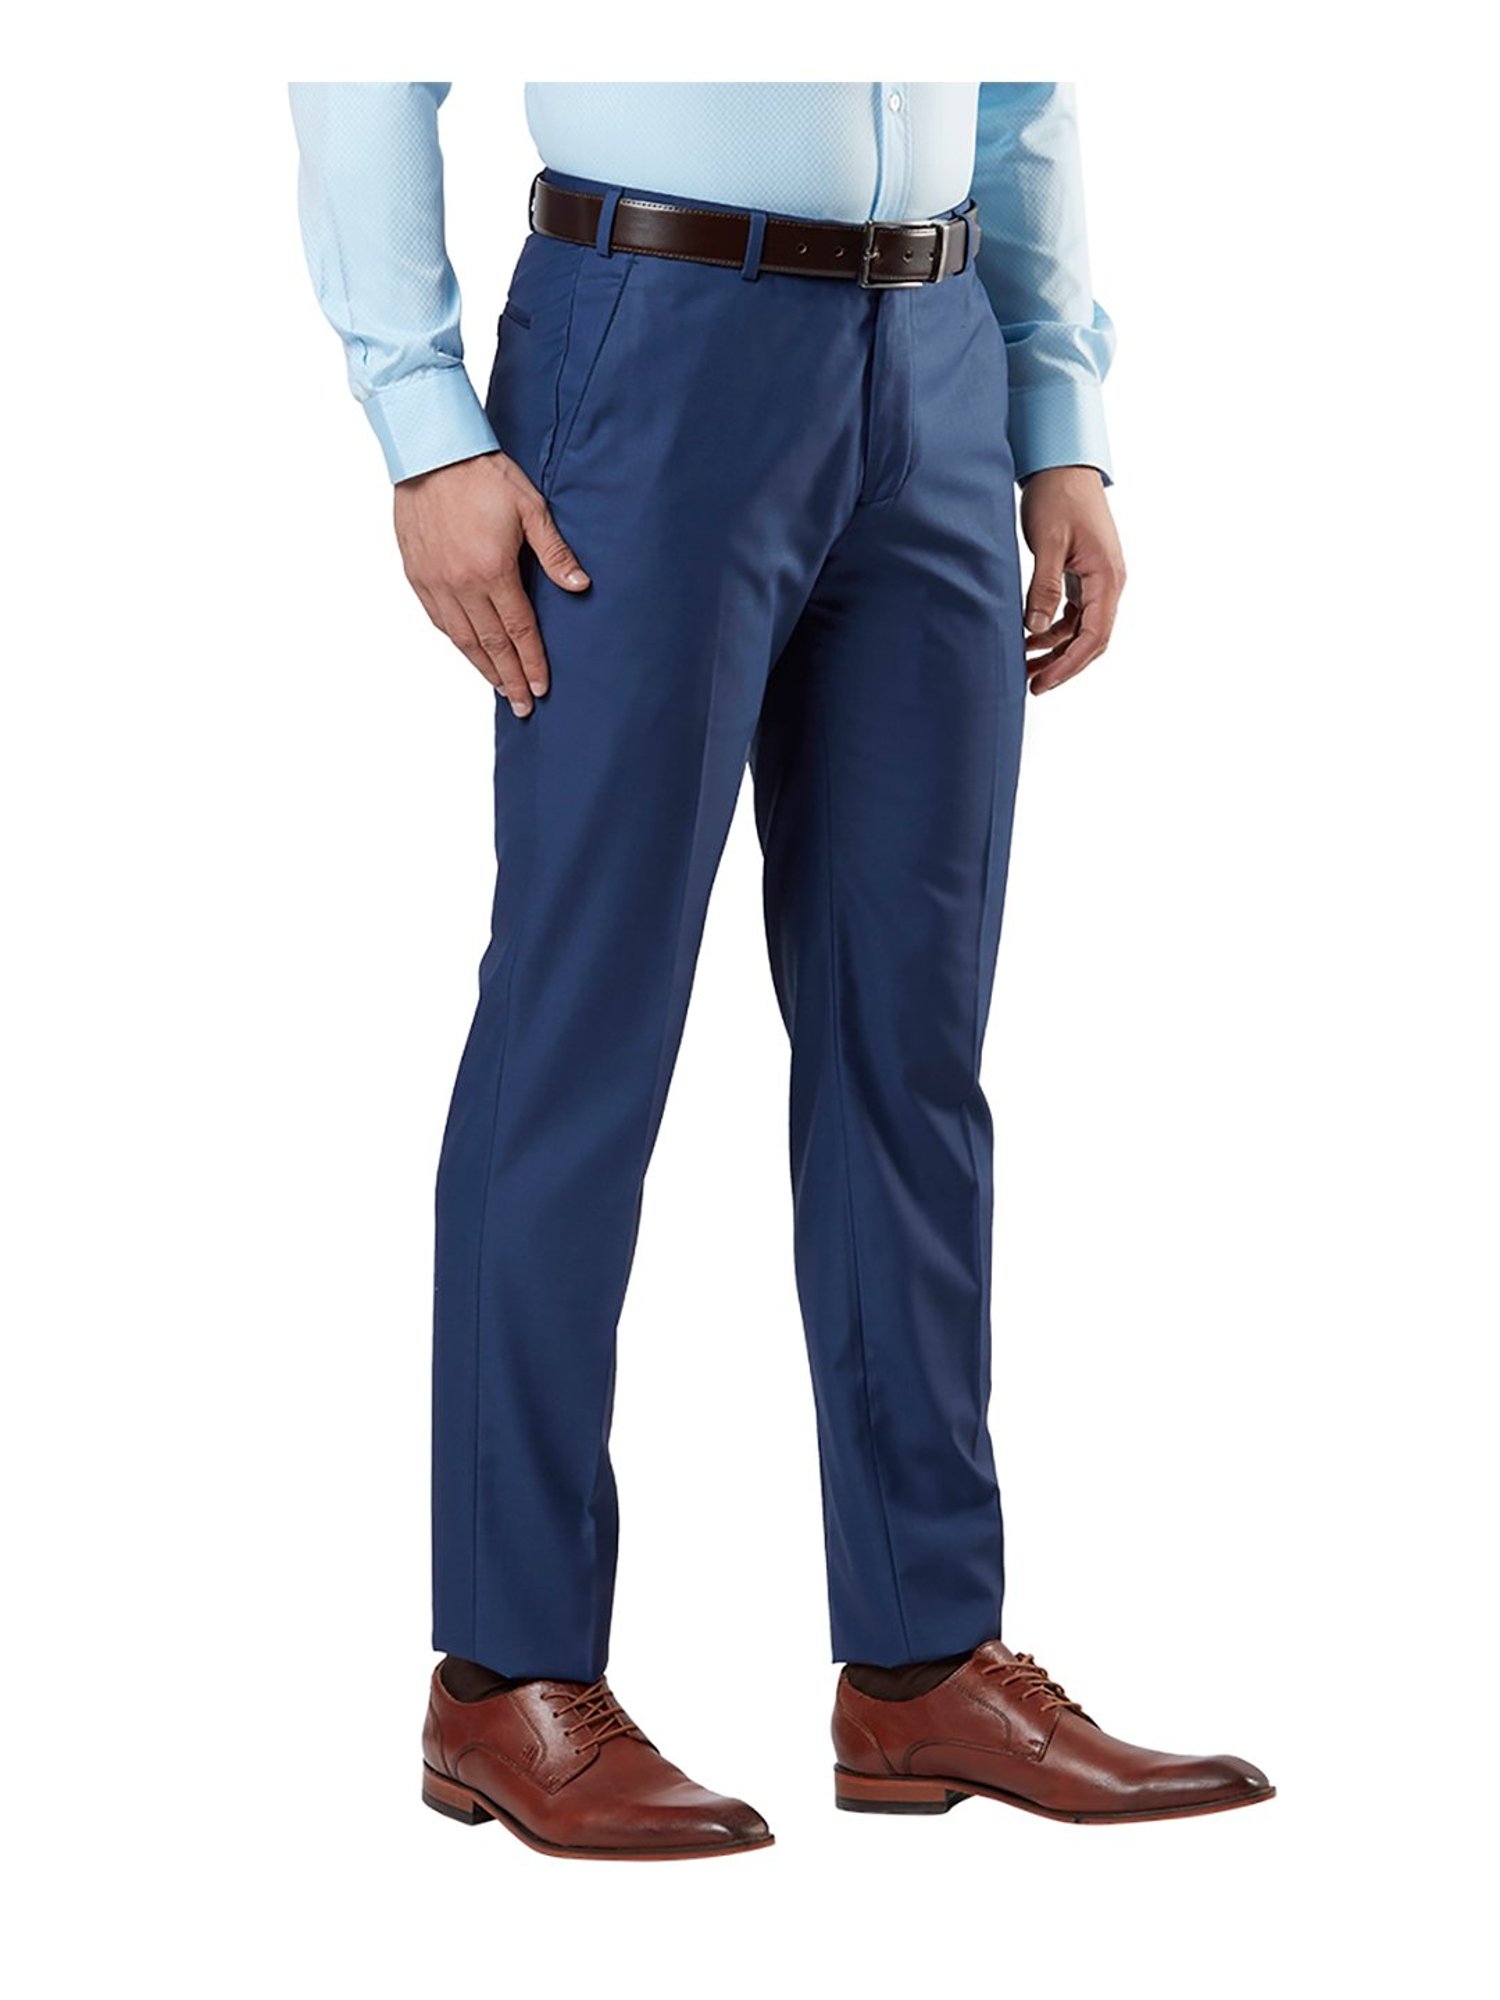 Buy Beige Trousers  Pants for Men by NEXT LOOK Online  Ajiocom